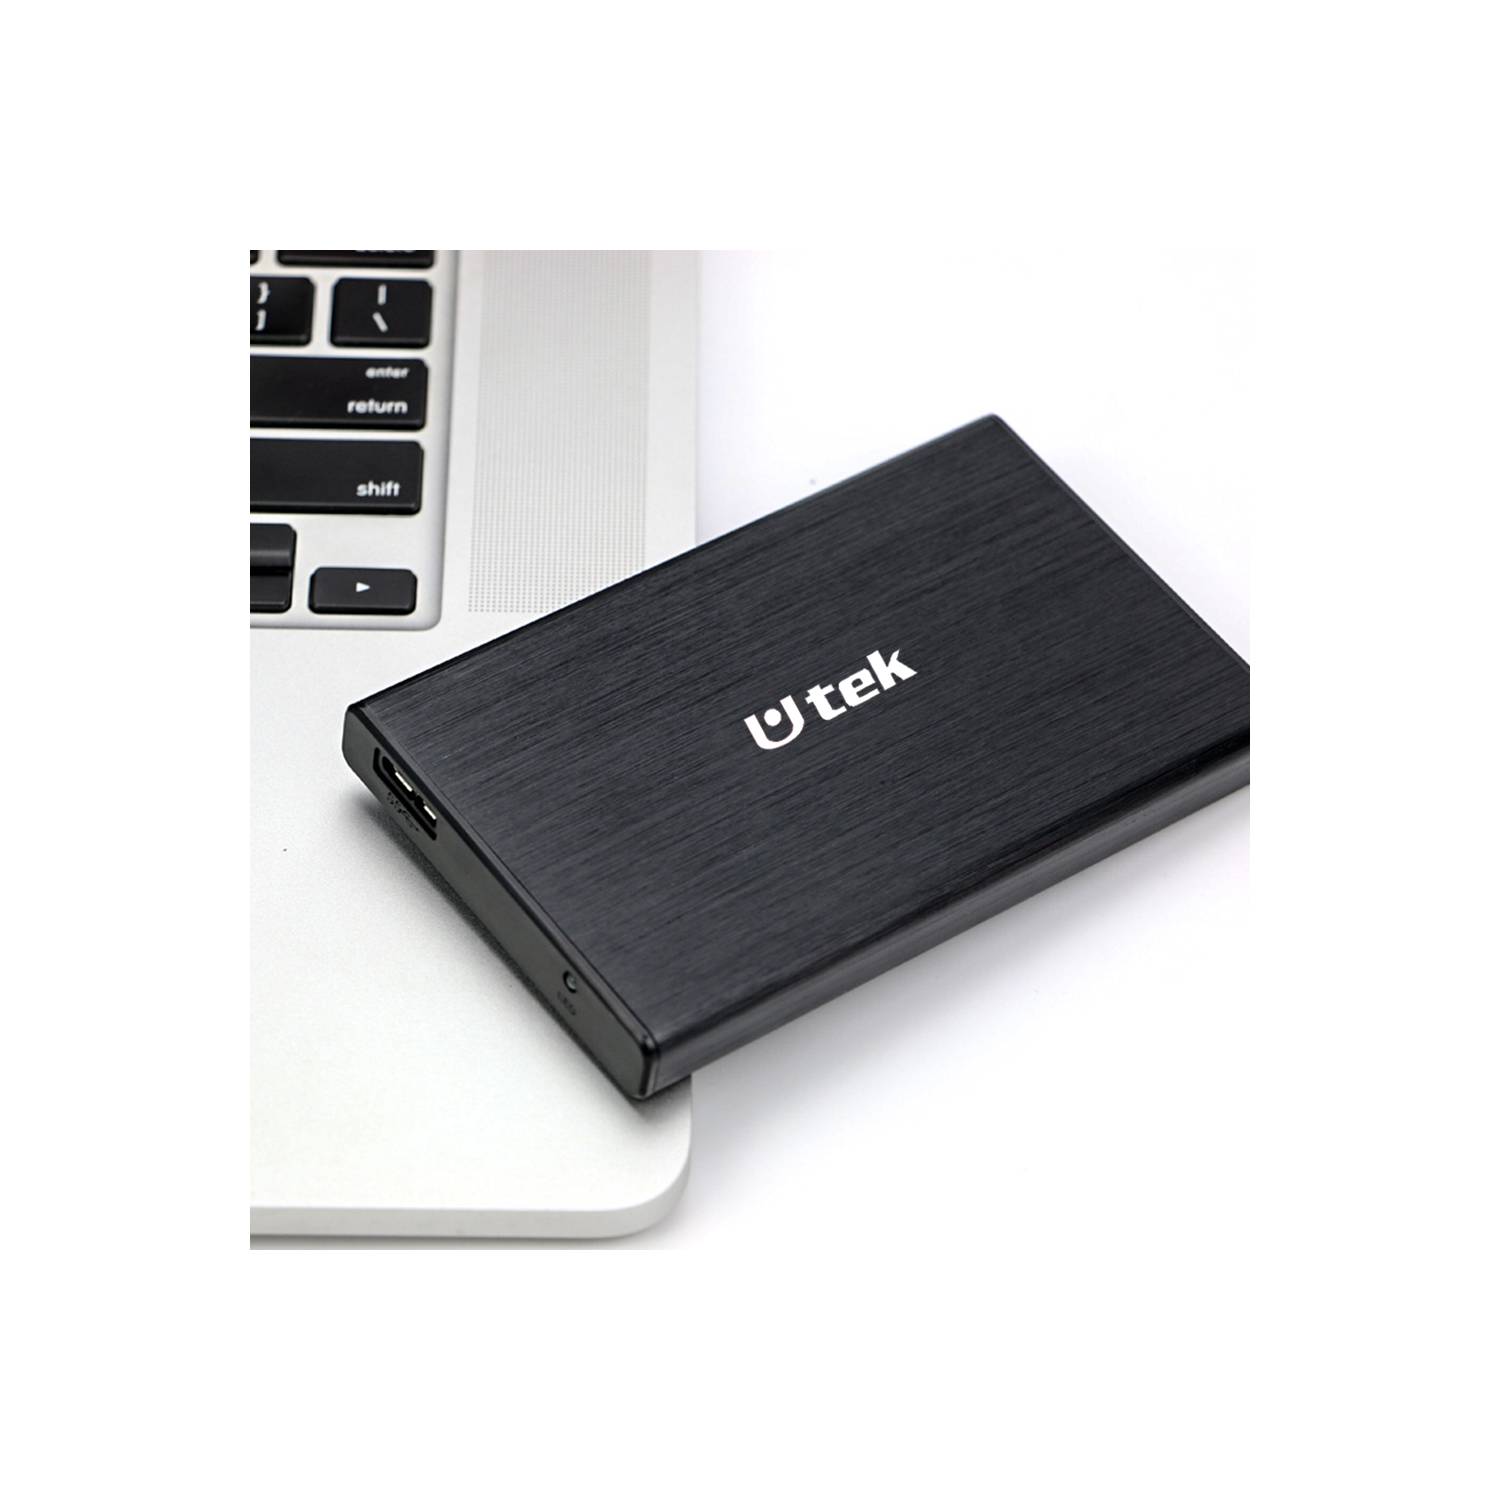 UTEK Cofre porta duro sata 2,5 conexión usb color negro falabella.com